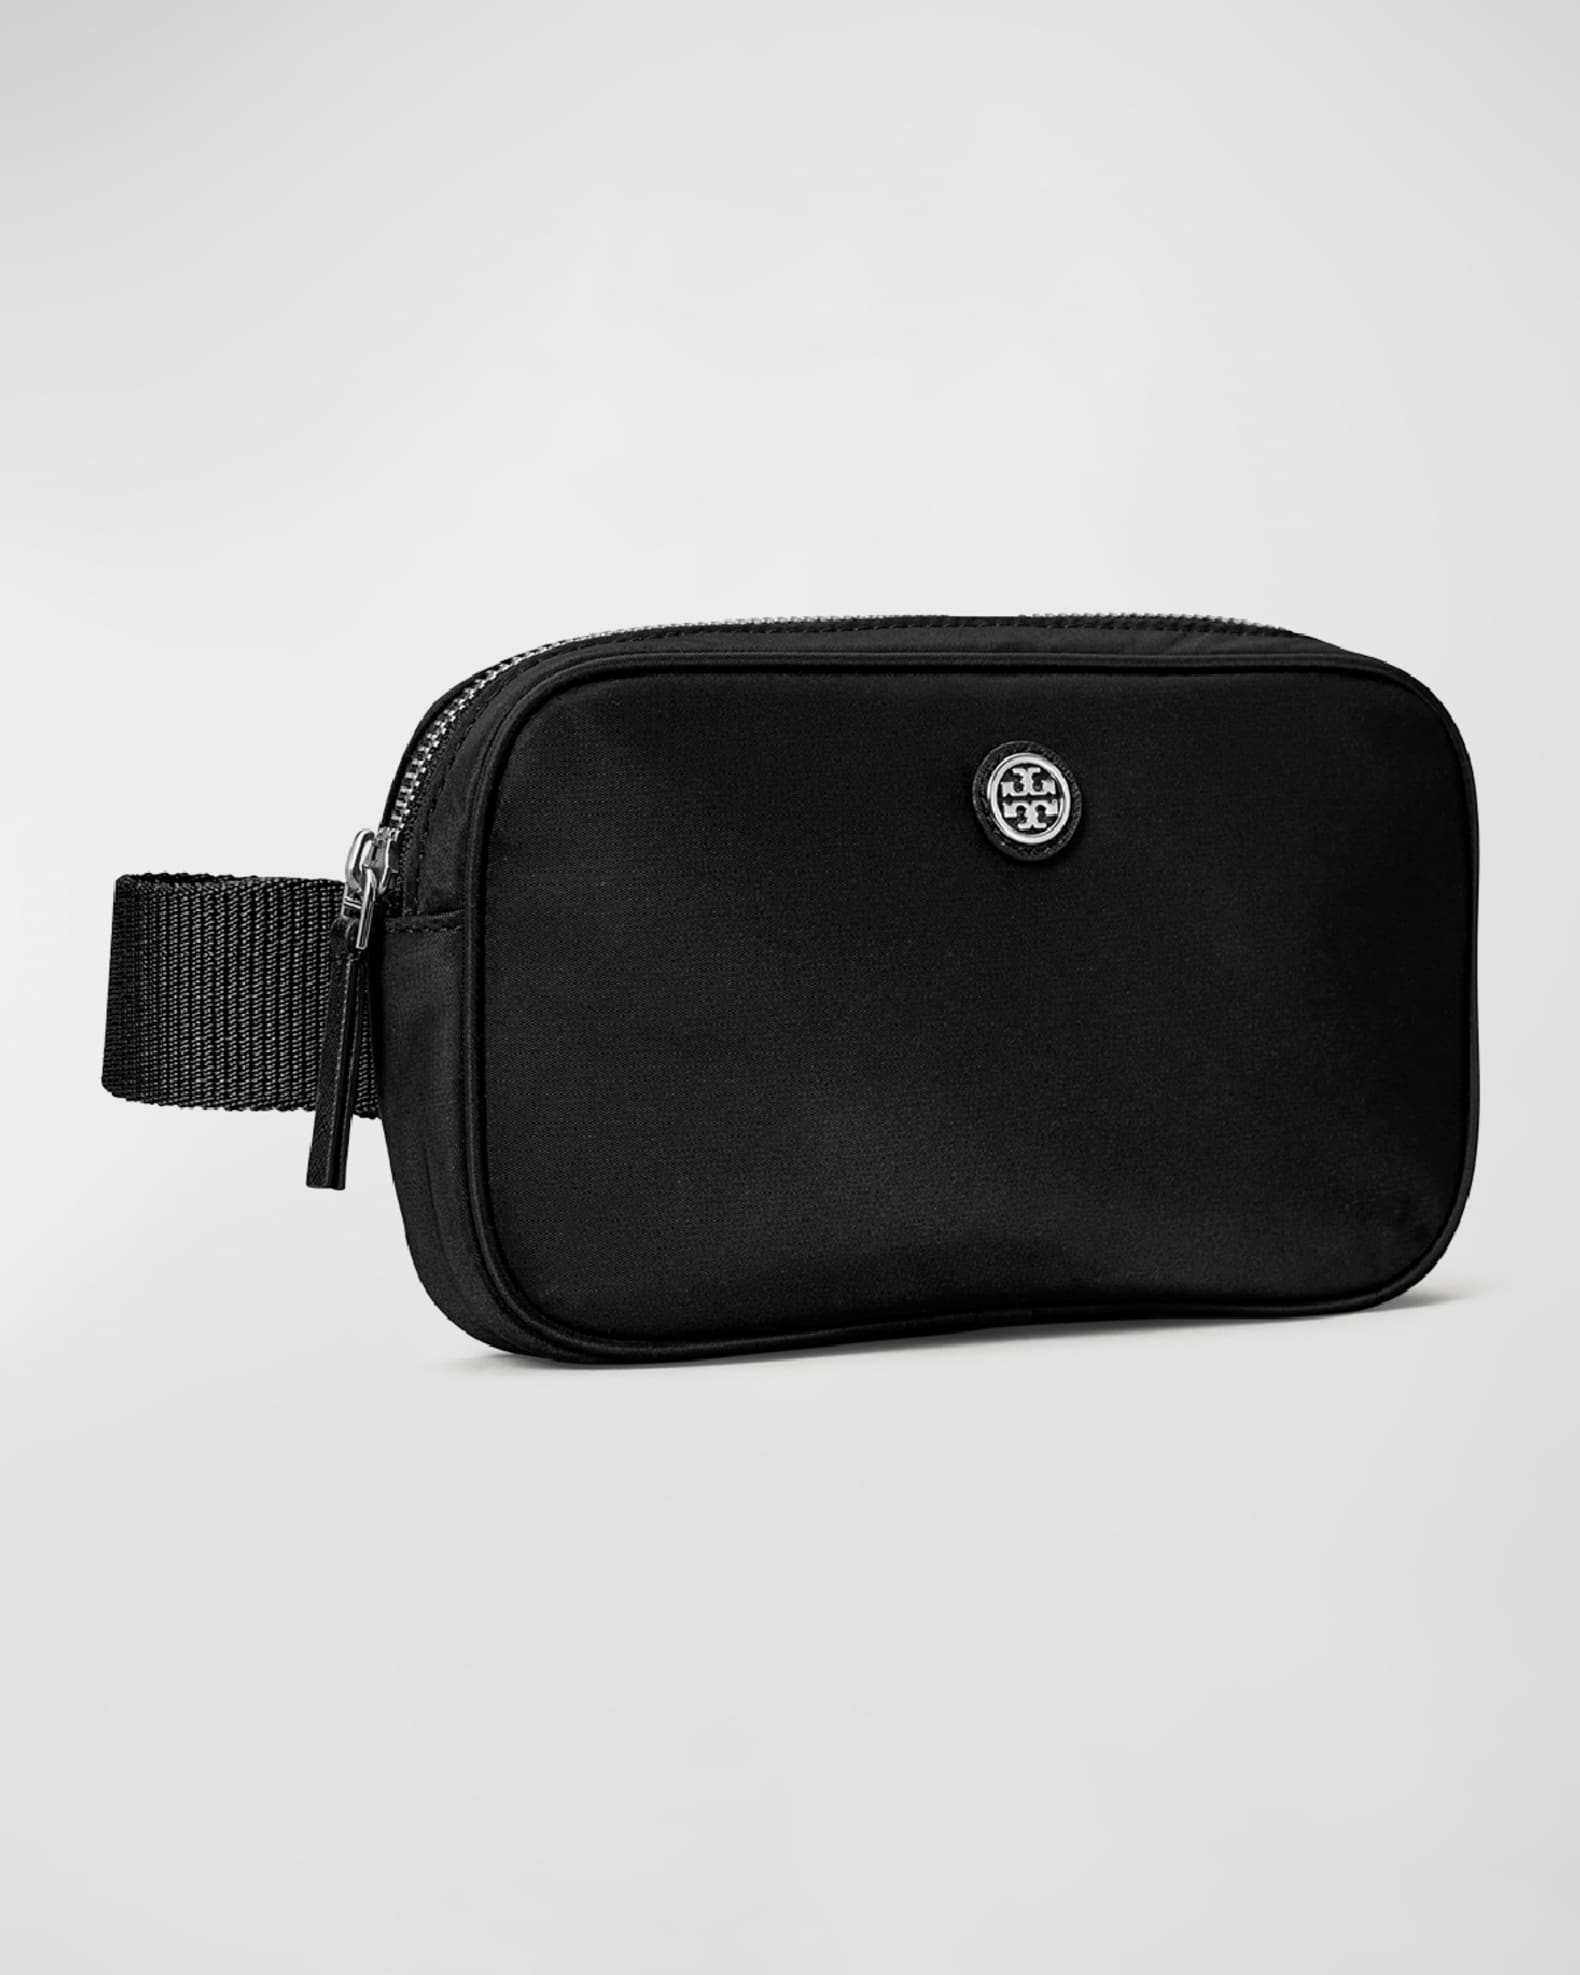 Giorgio Armani Women's Belt Bag - Black - Belt Bags